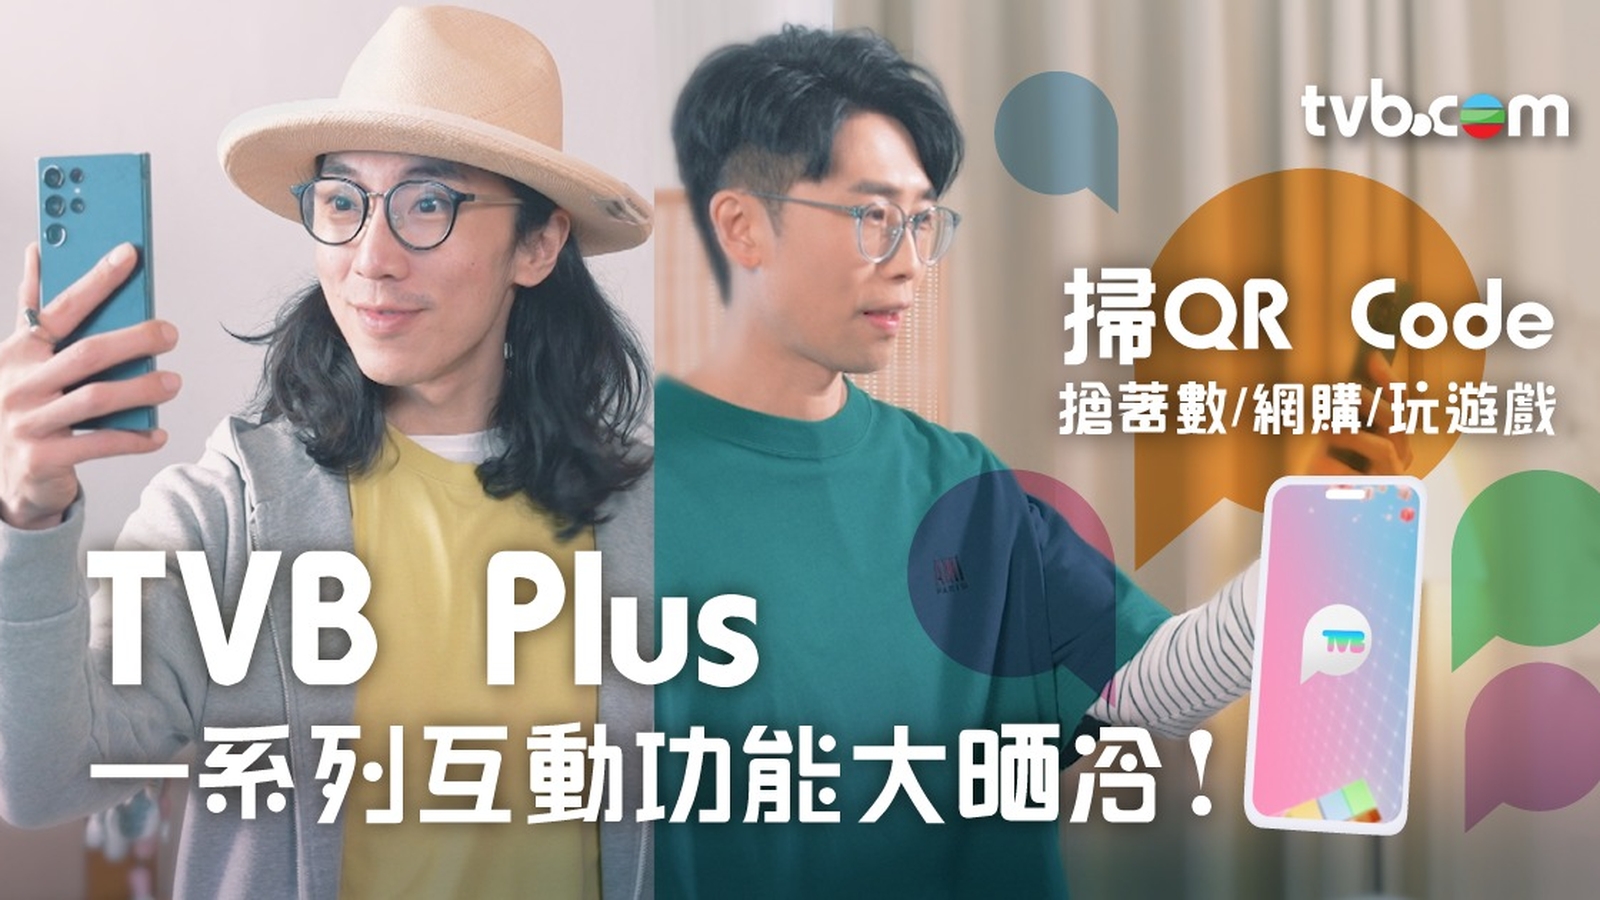 TVB Plus全新一系列互動功能大晒冷！睇電視掃QR Code拎優惠／網購／投票 即睇懶人包